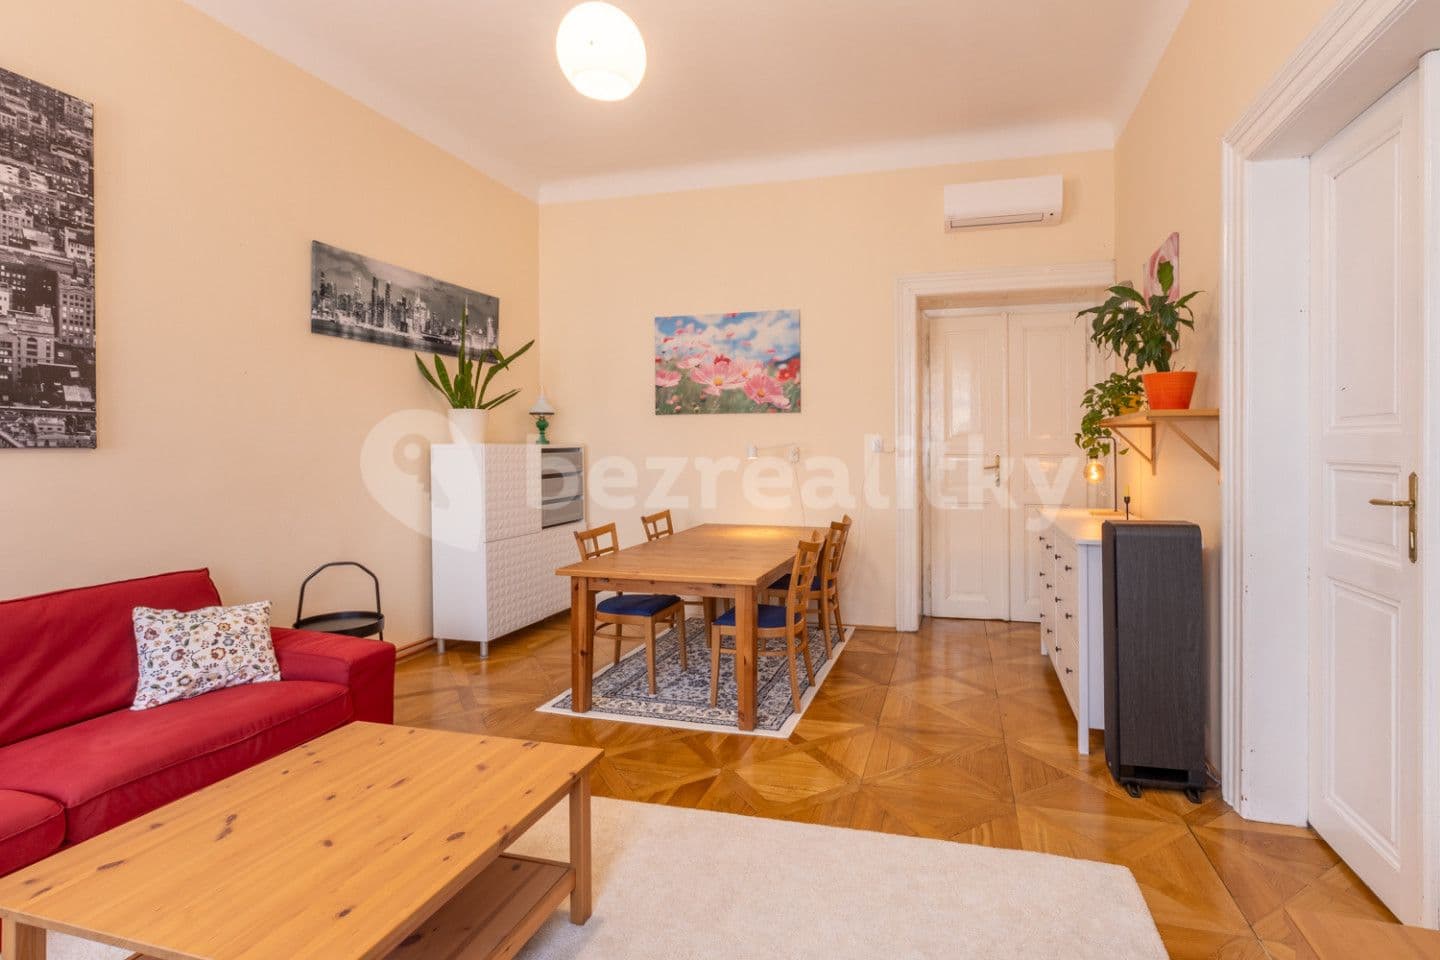 2 bedroom with open-plan kitchen flat for sale, 85 m², Palackého, Prague, Prague